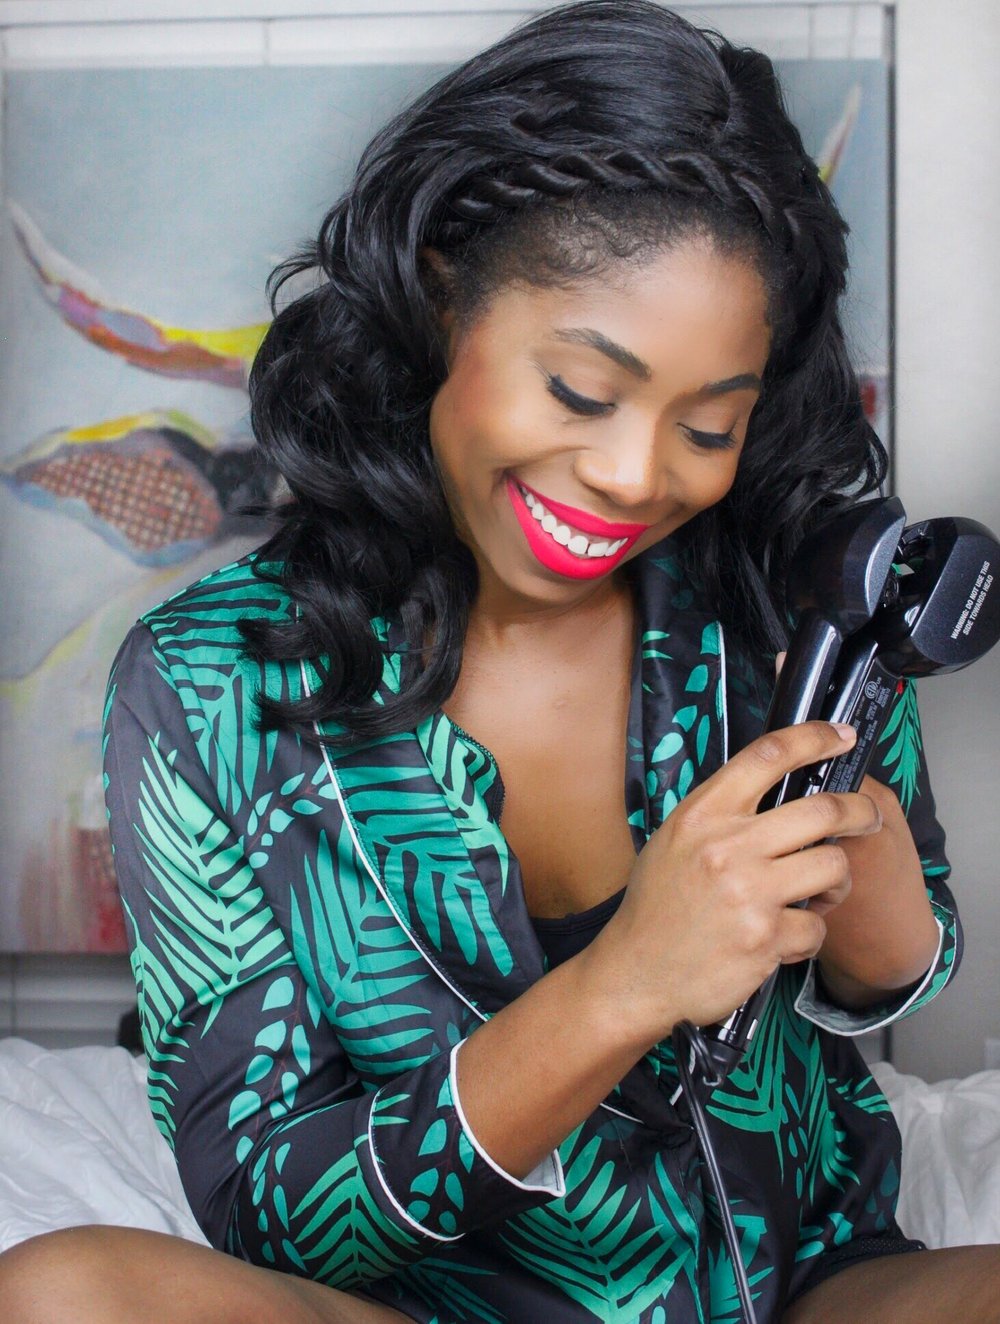 conair hair tool beauty tutorials for moms dallas beauty blogger